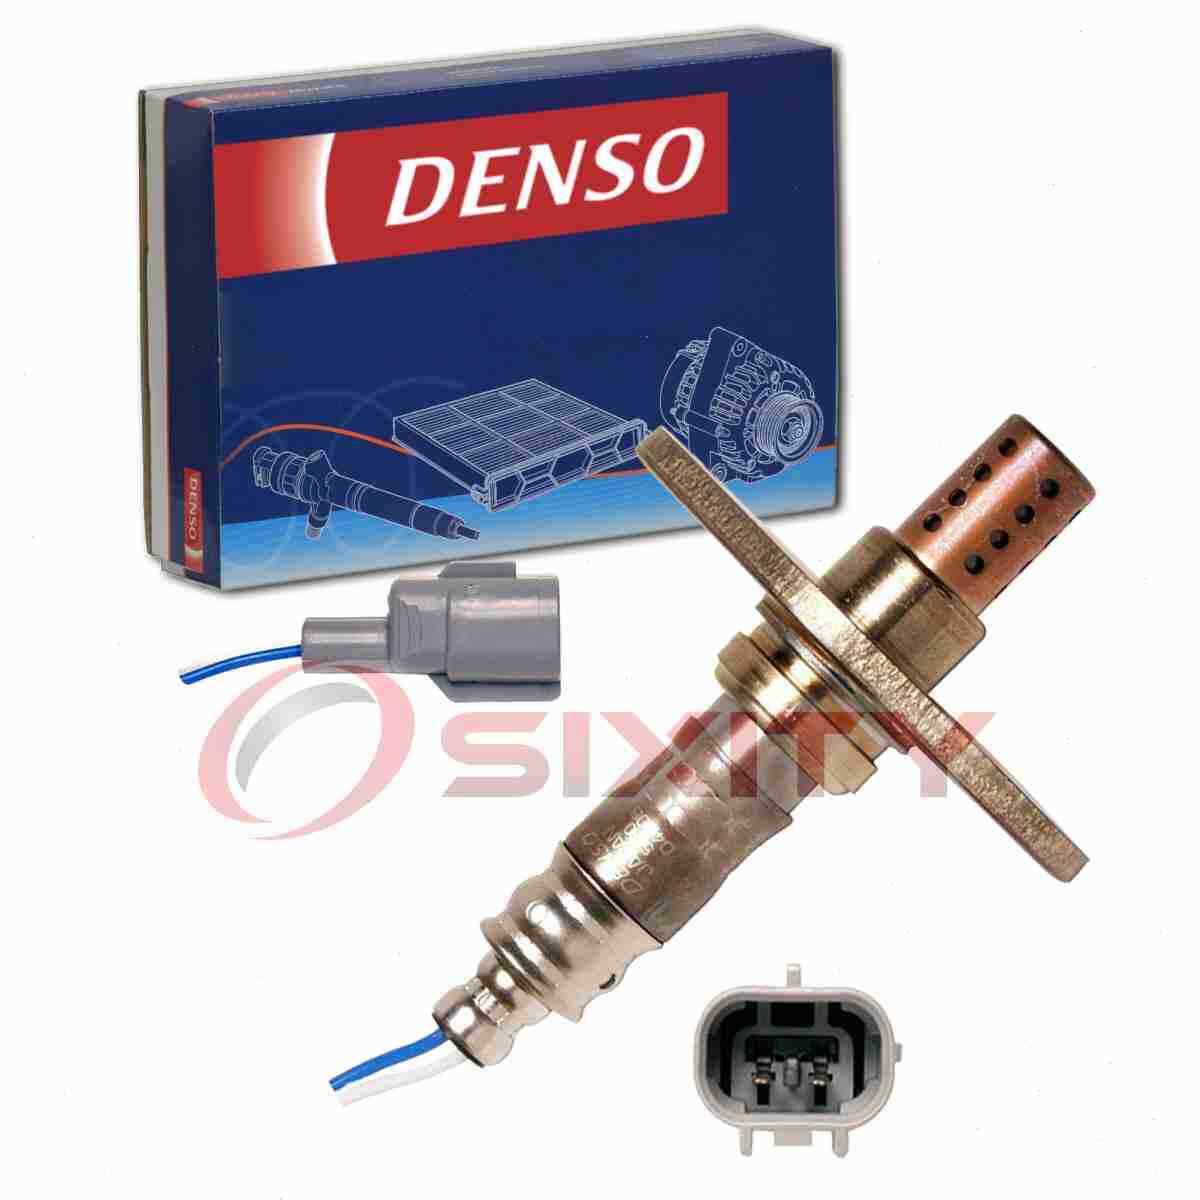 Denso Downstream Oxygen Sensor for 1991-1995 Toyota Previa 2.4L L4 Exhaust it